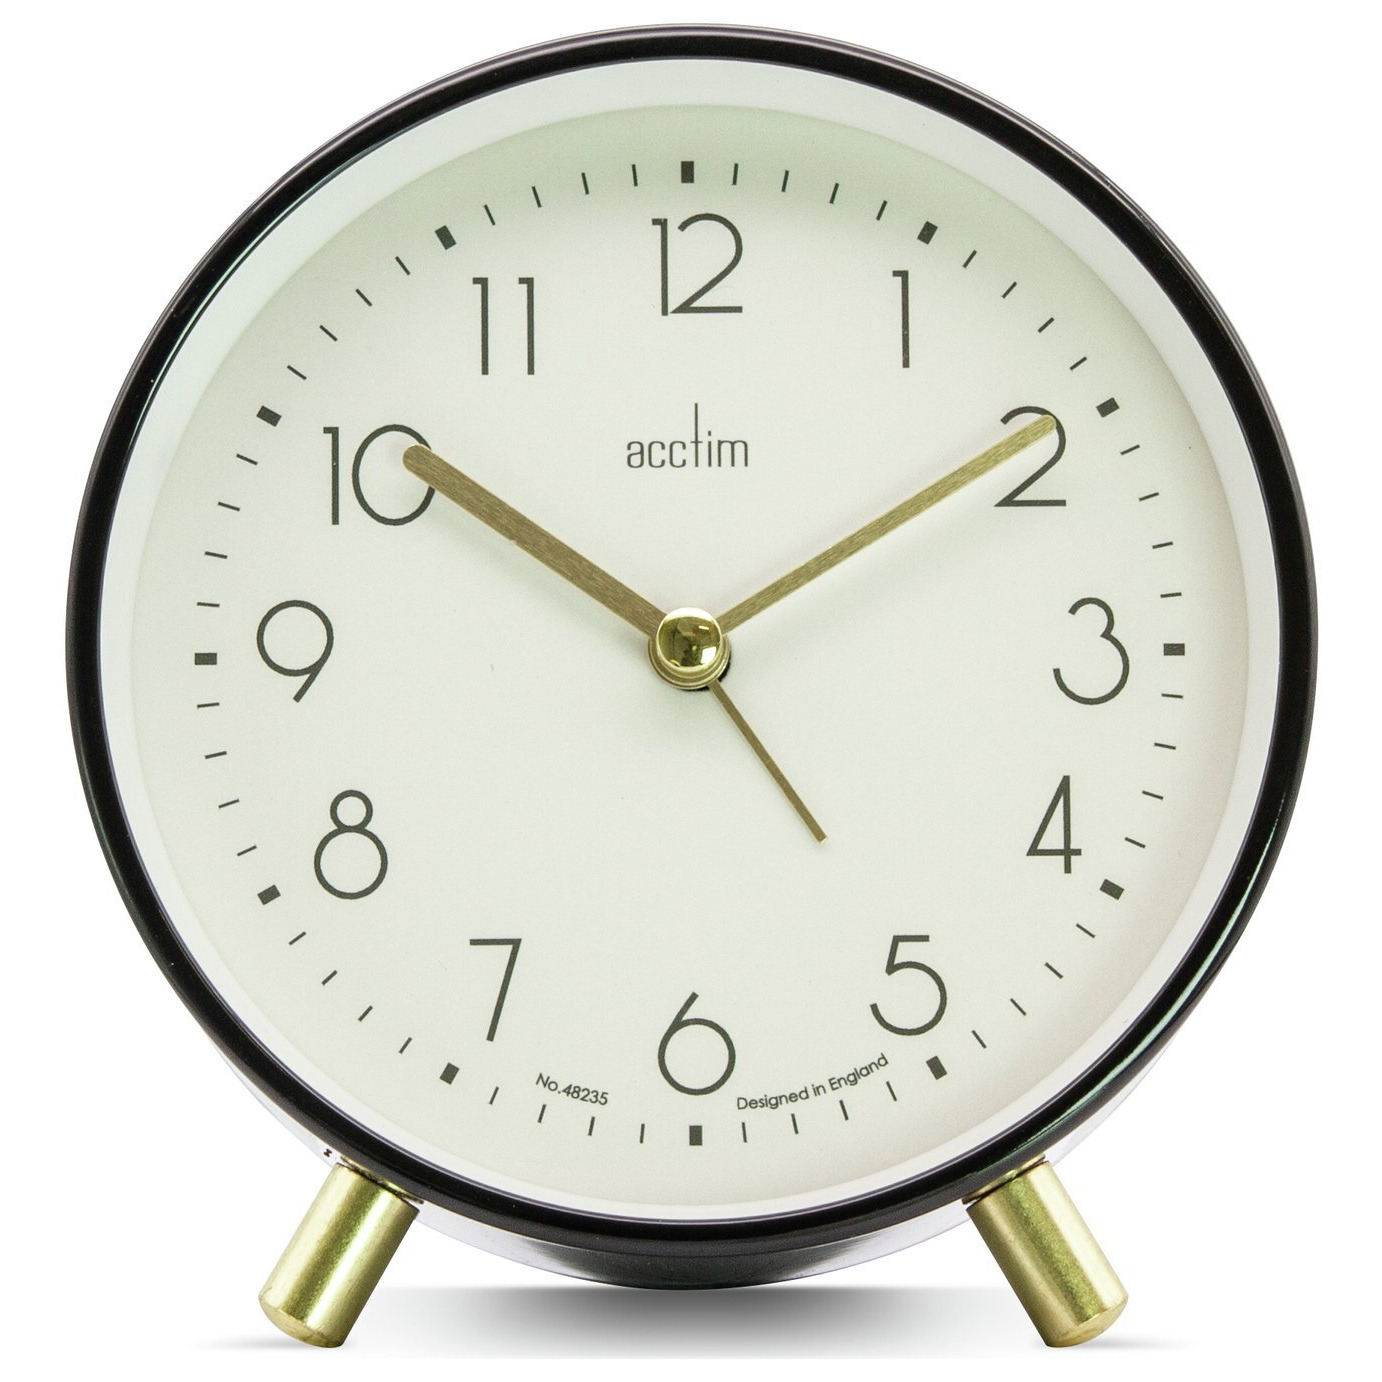 Acctim Fossen Metal Alarm Clock - Black - image 1